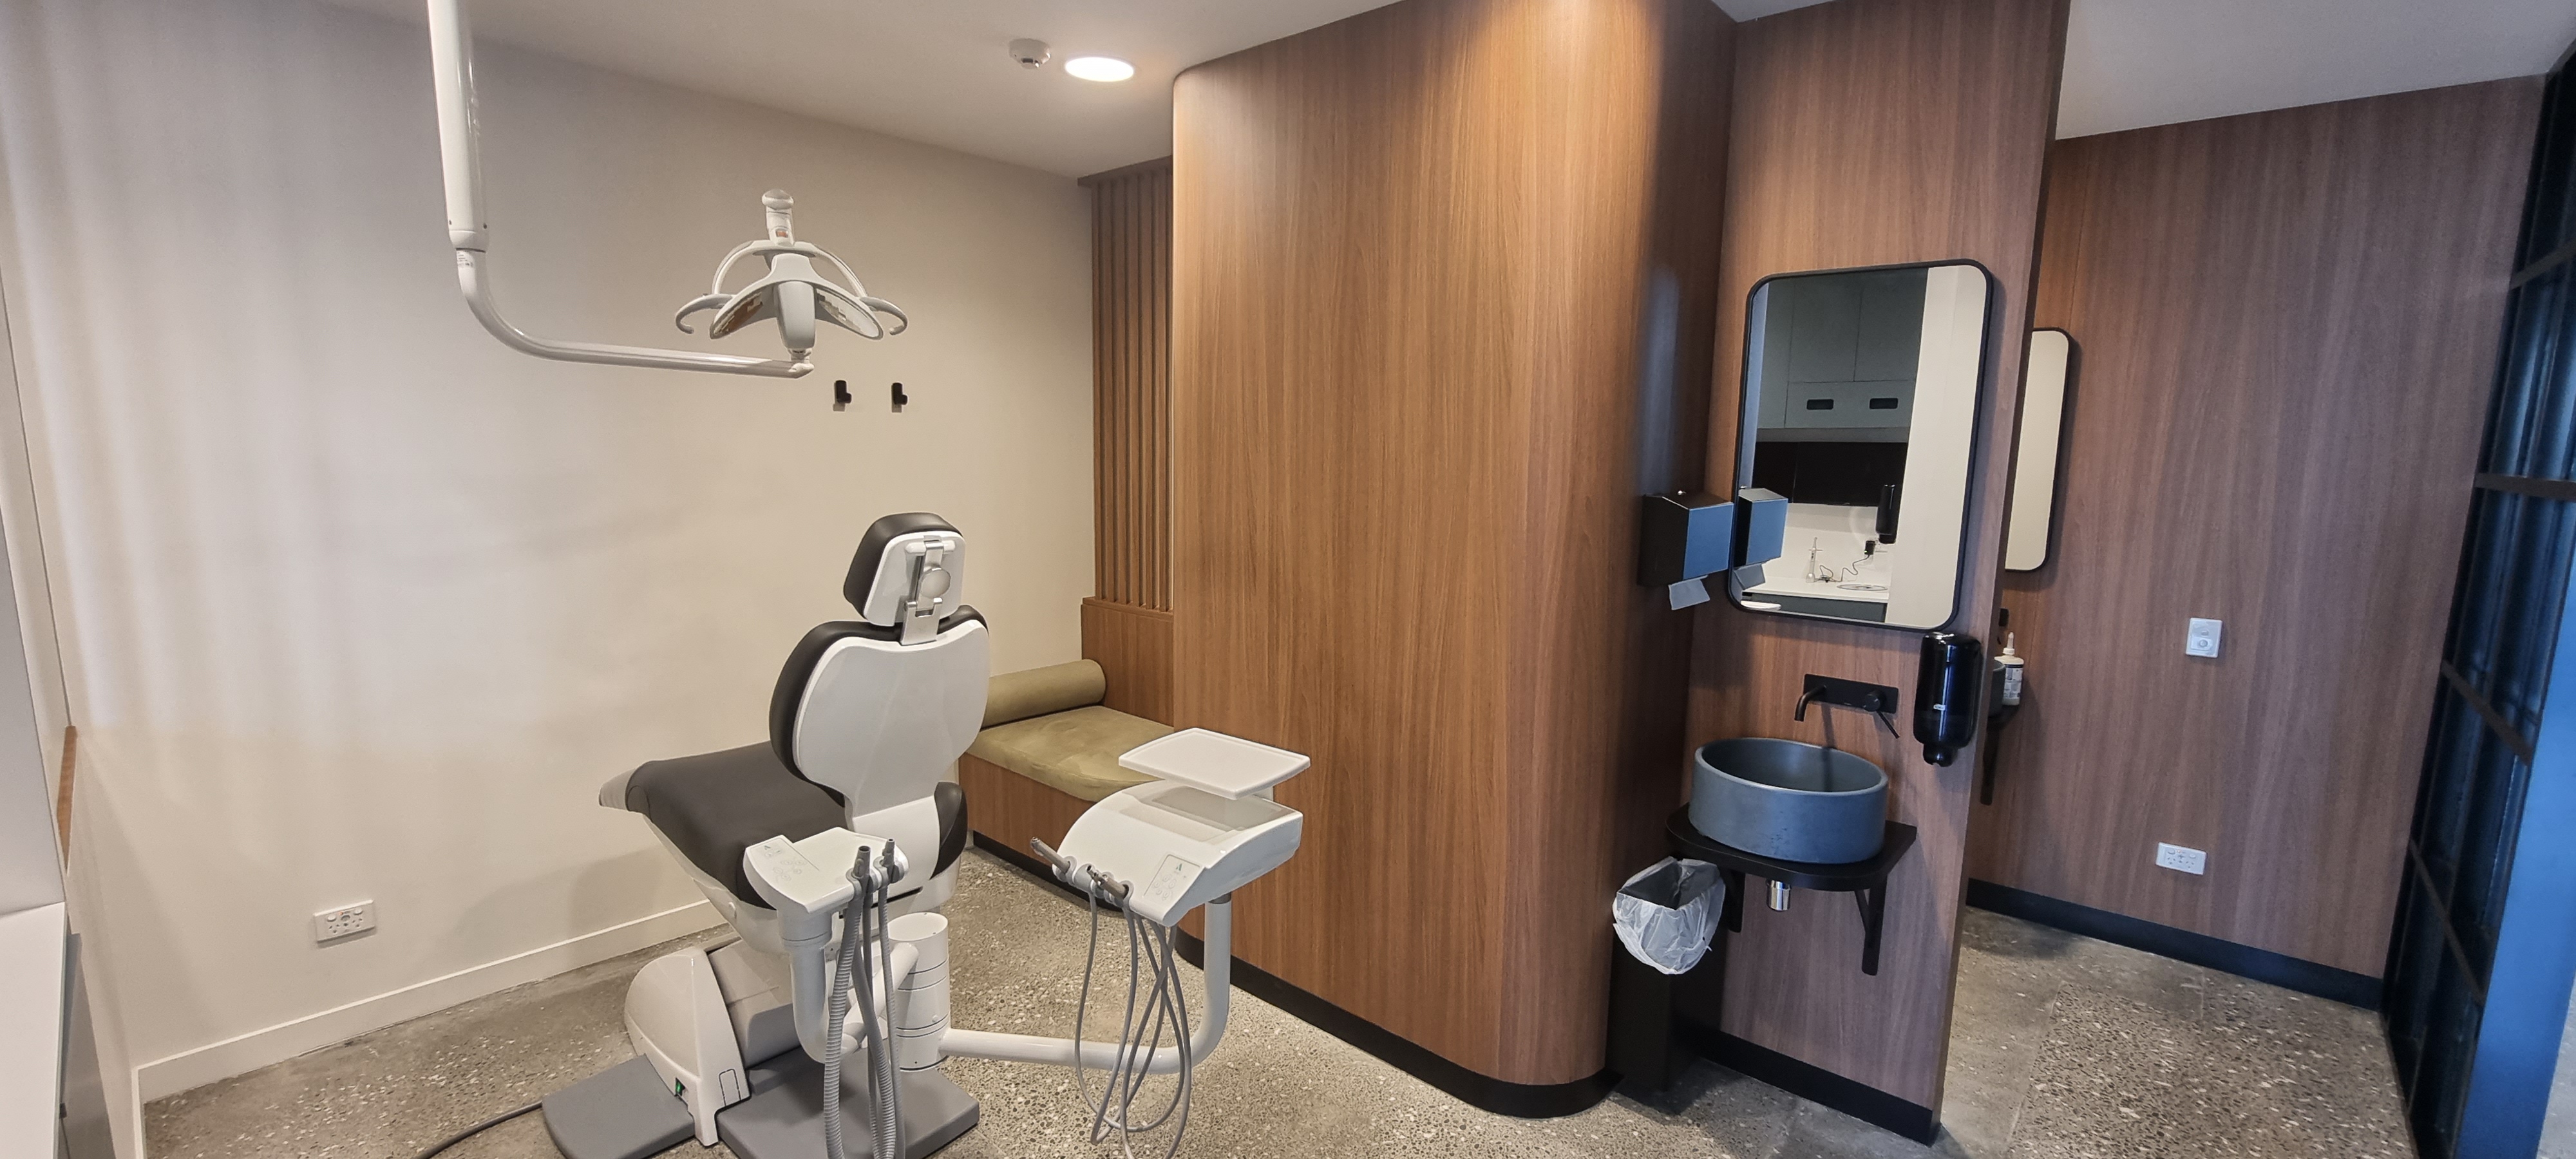 dental treatment room setup